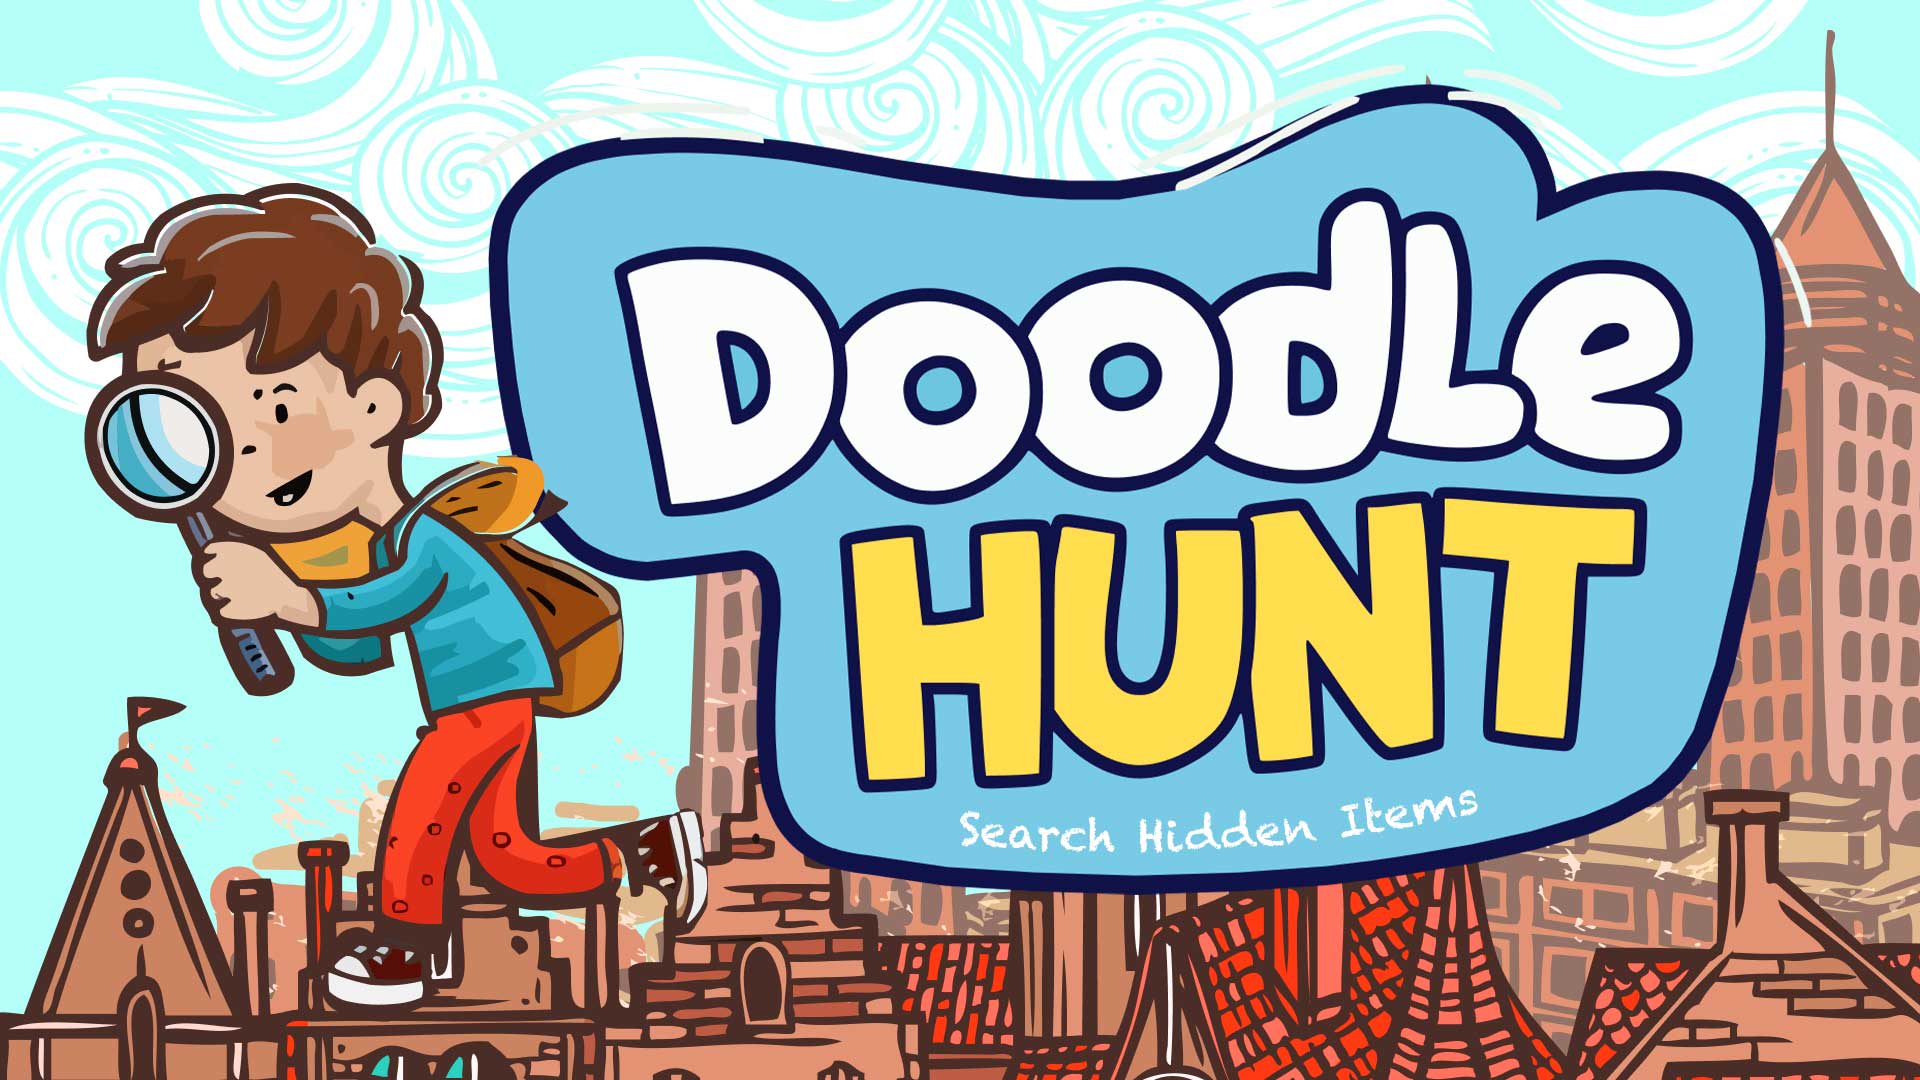 Doodle Hunt: Search Hidden Items